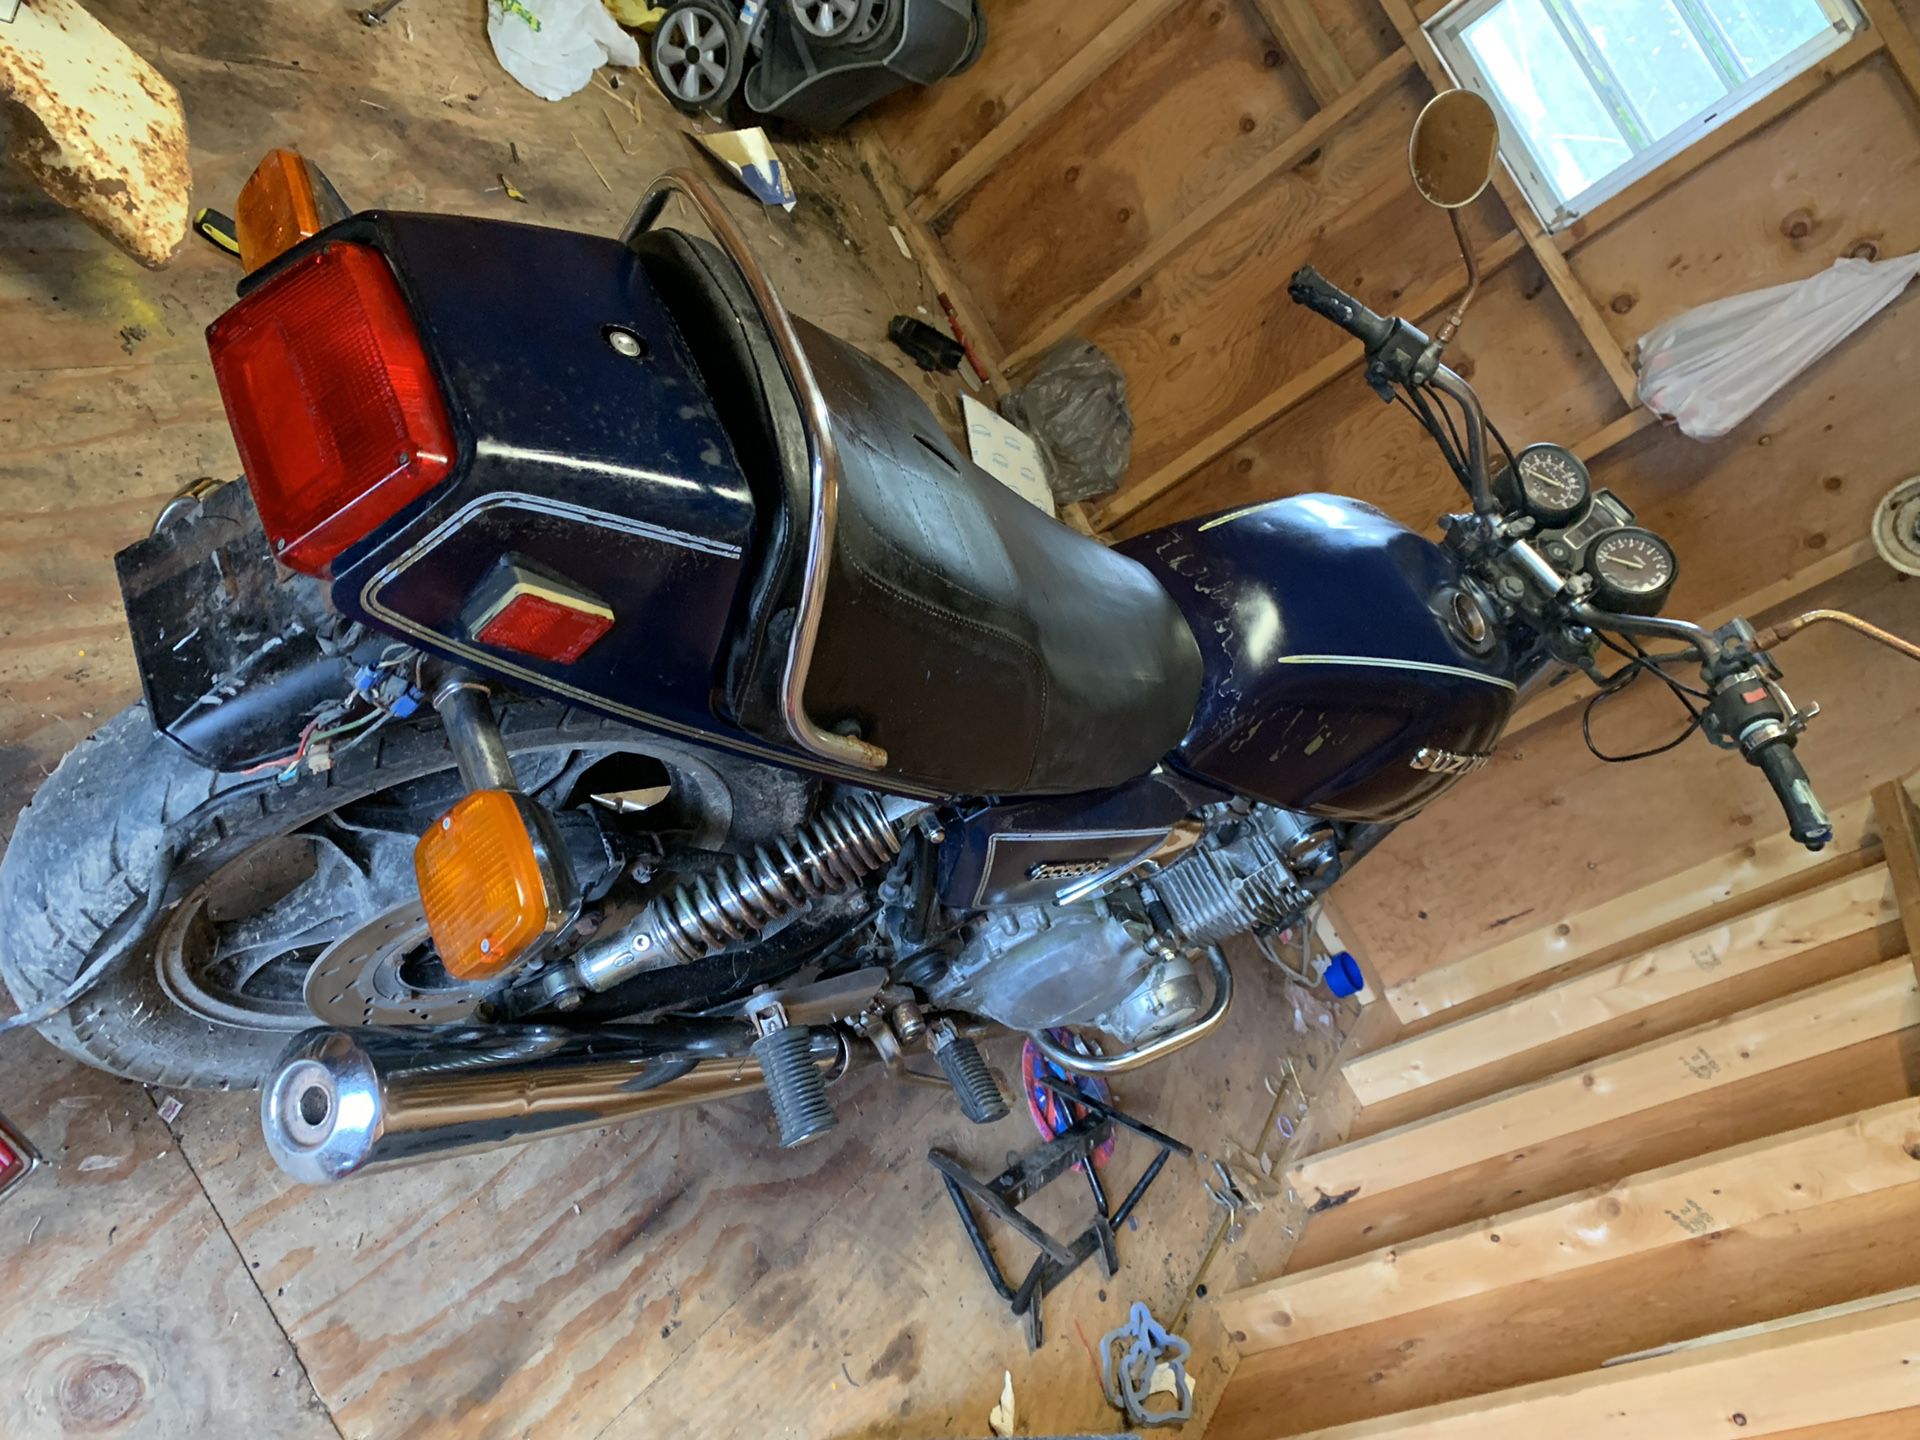 Suzuki motorcycle